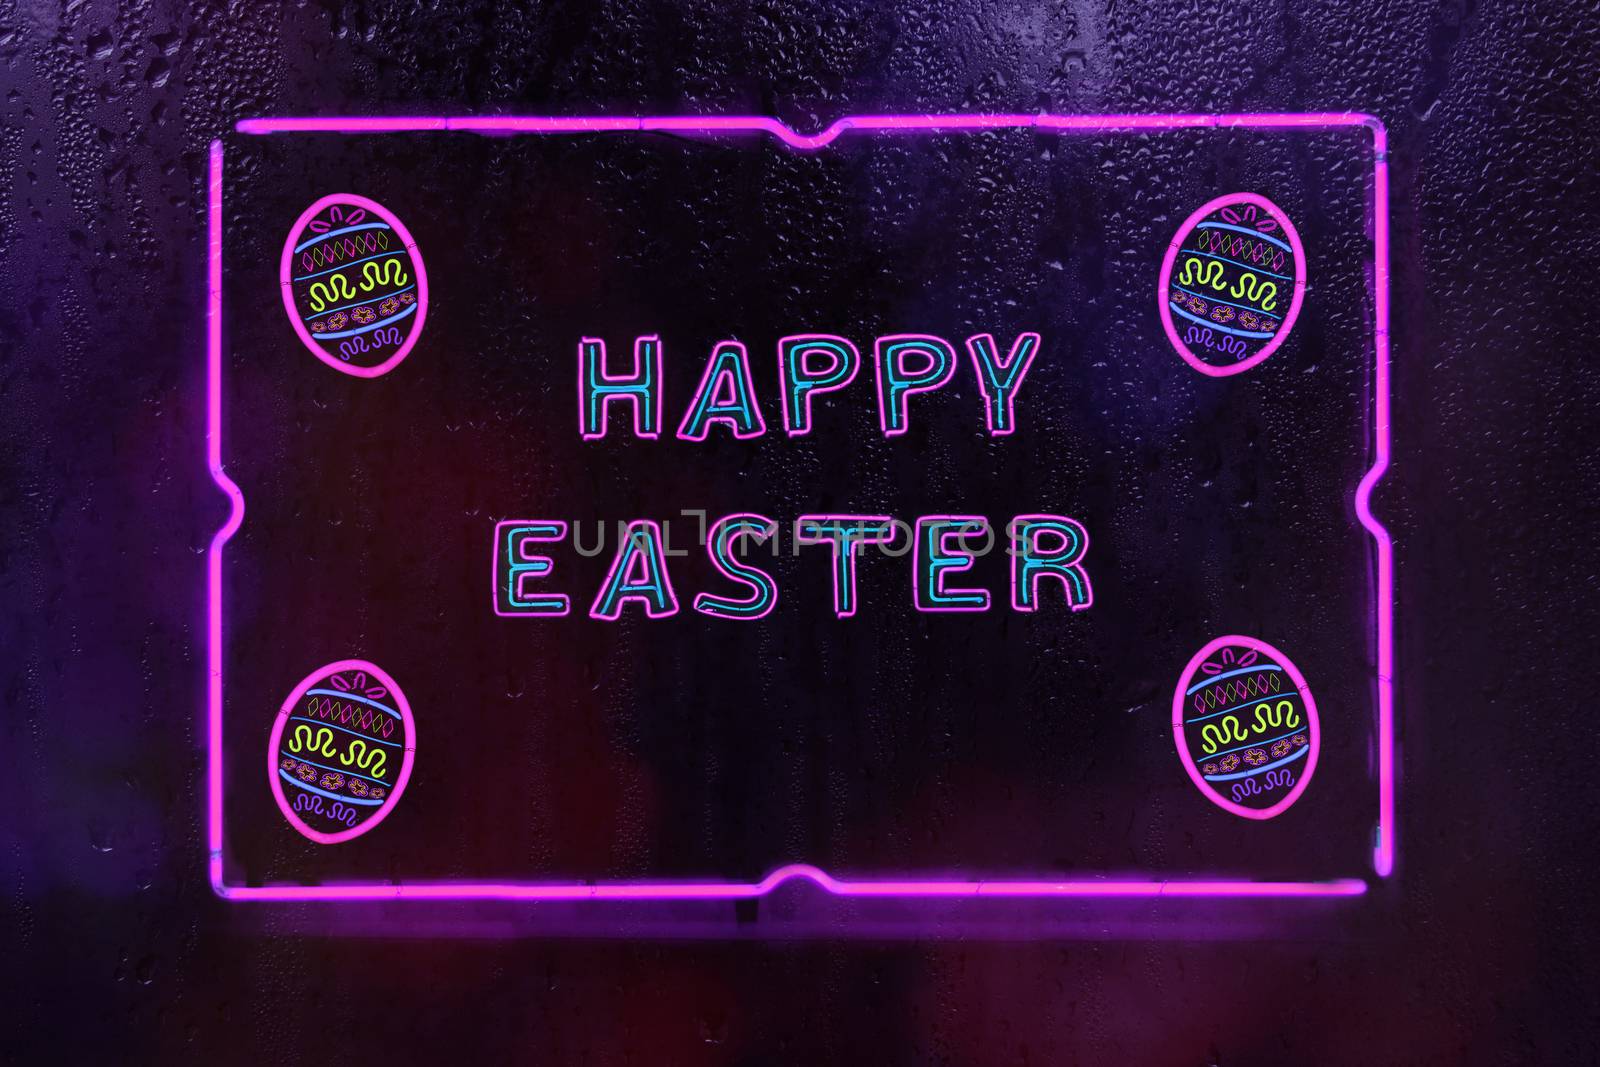 Neon Happy Easter Sign in Rainy Window Photo Composite